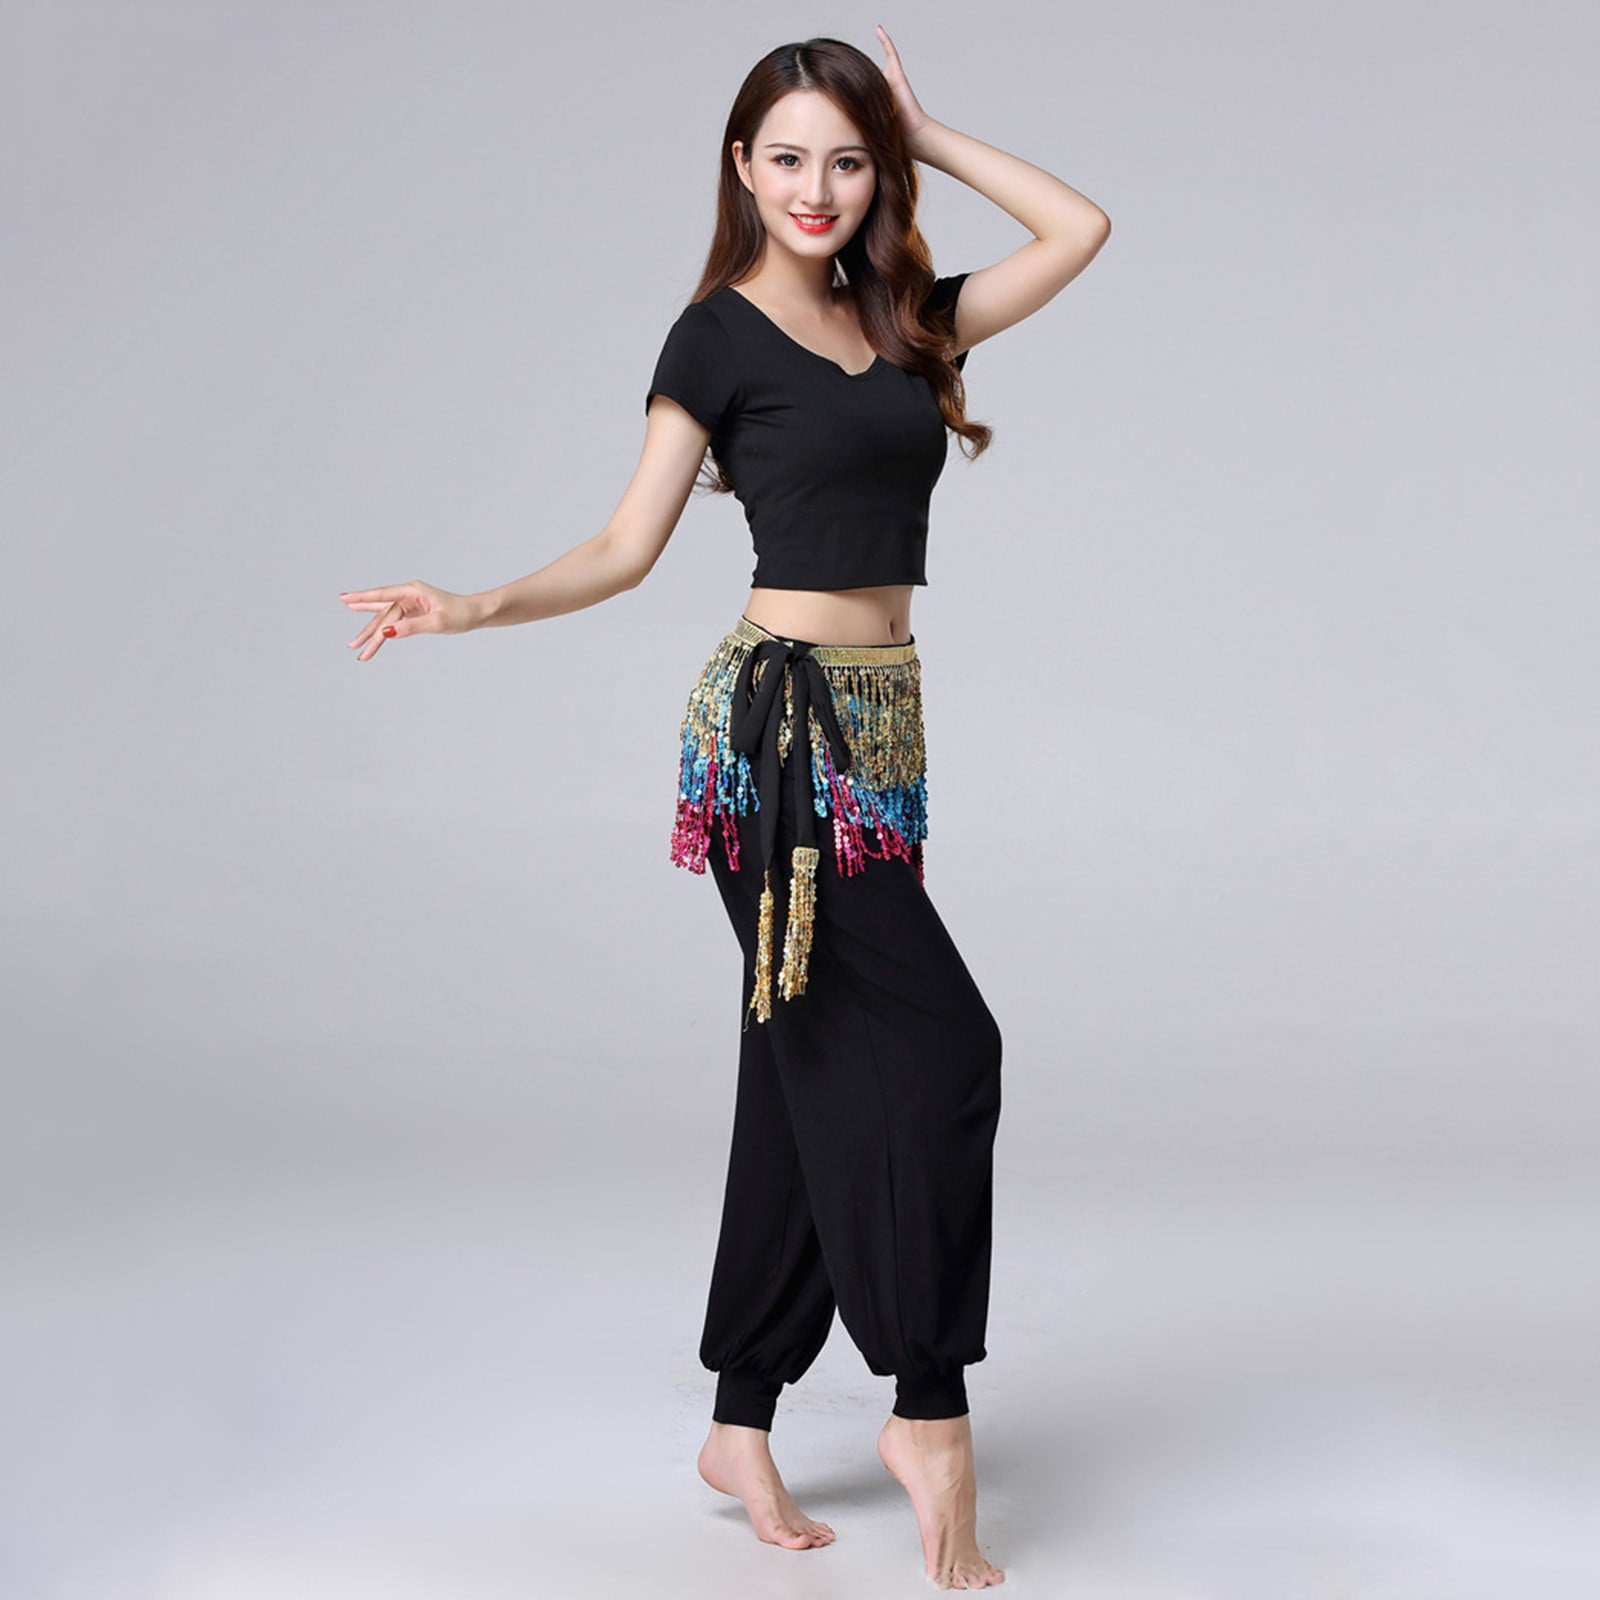 New Belly Dance Costume 3 pics Vest Top & Split Pants & Tassel Belt 9 colors 